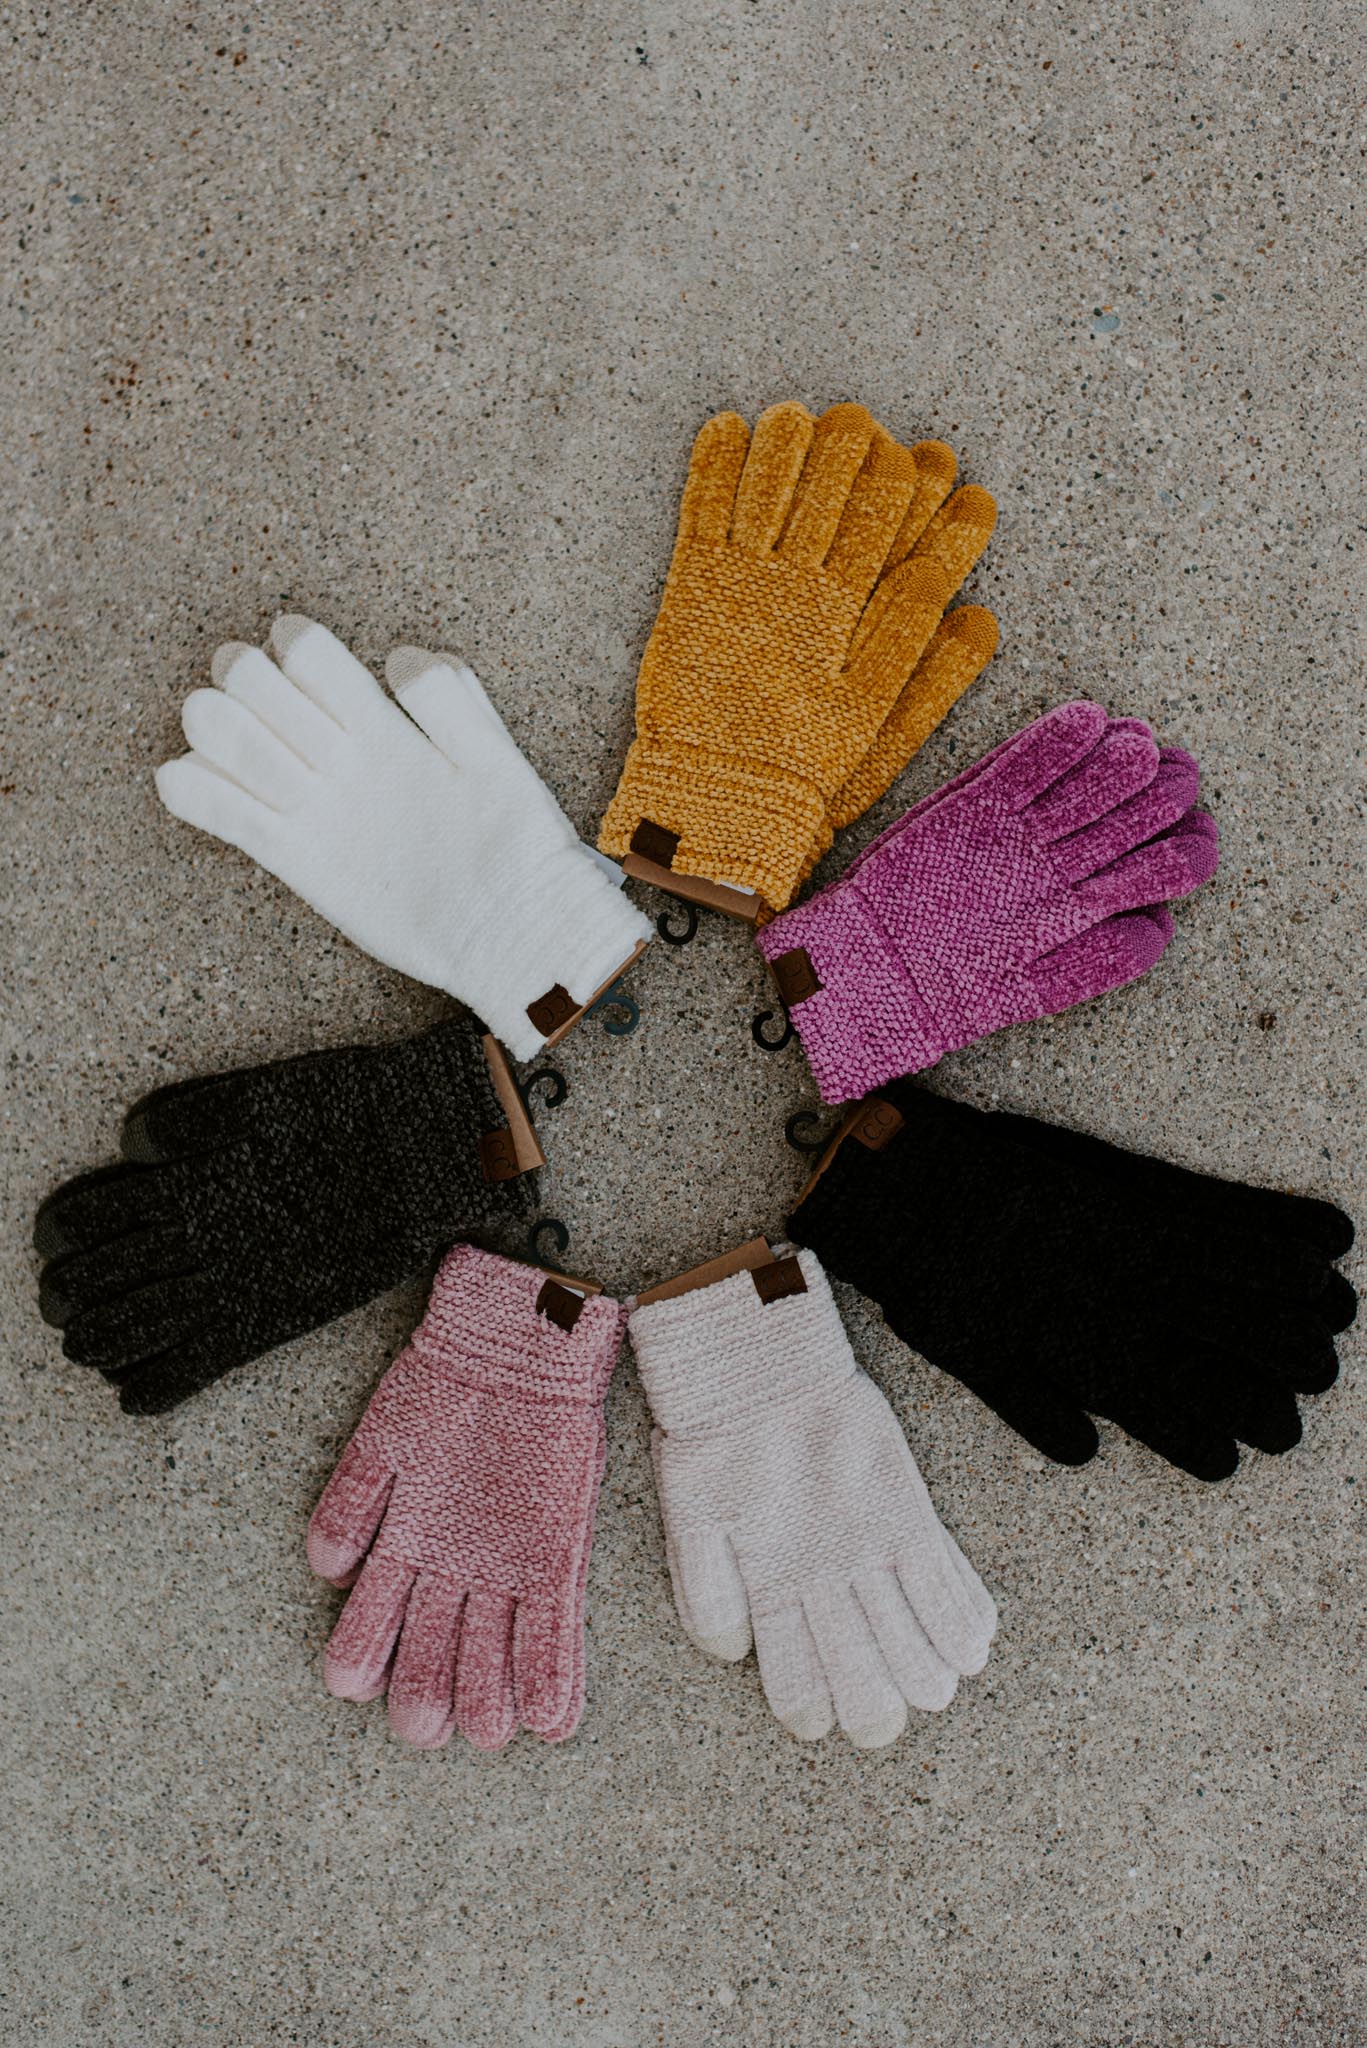 C.C. Chenille Smart Touch Gloves | 7 Colors